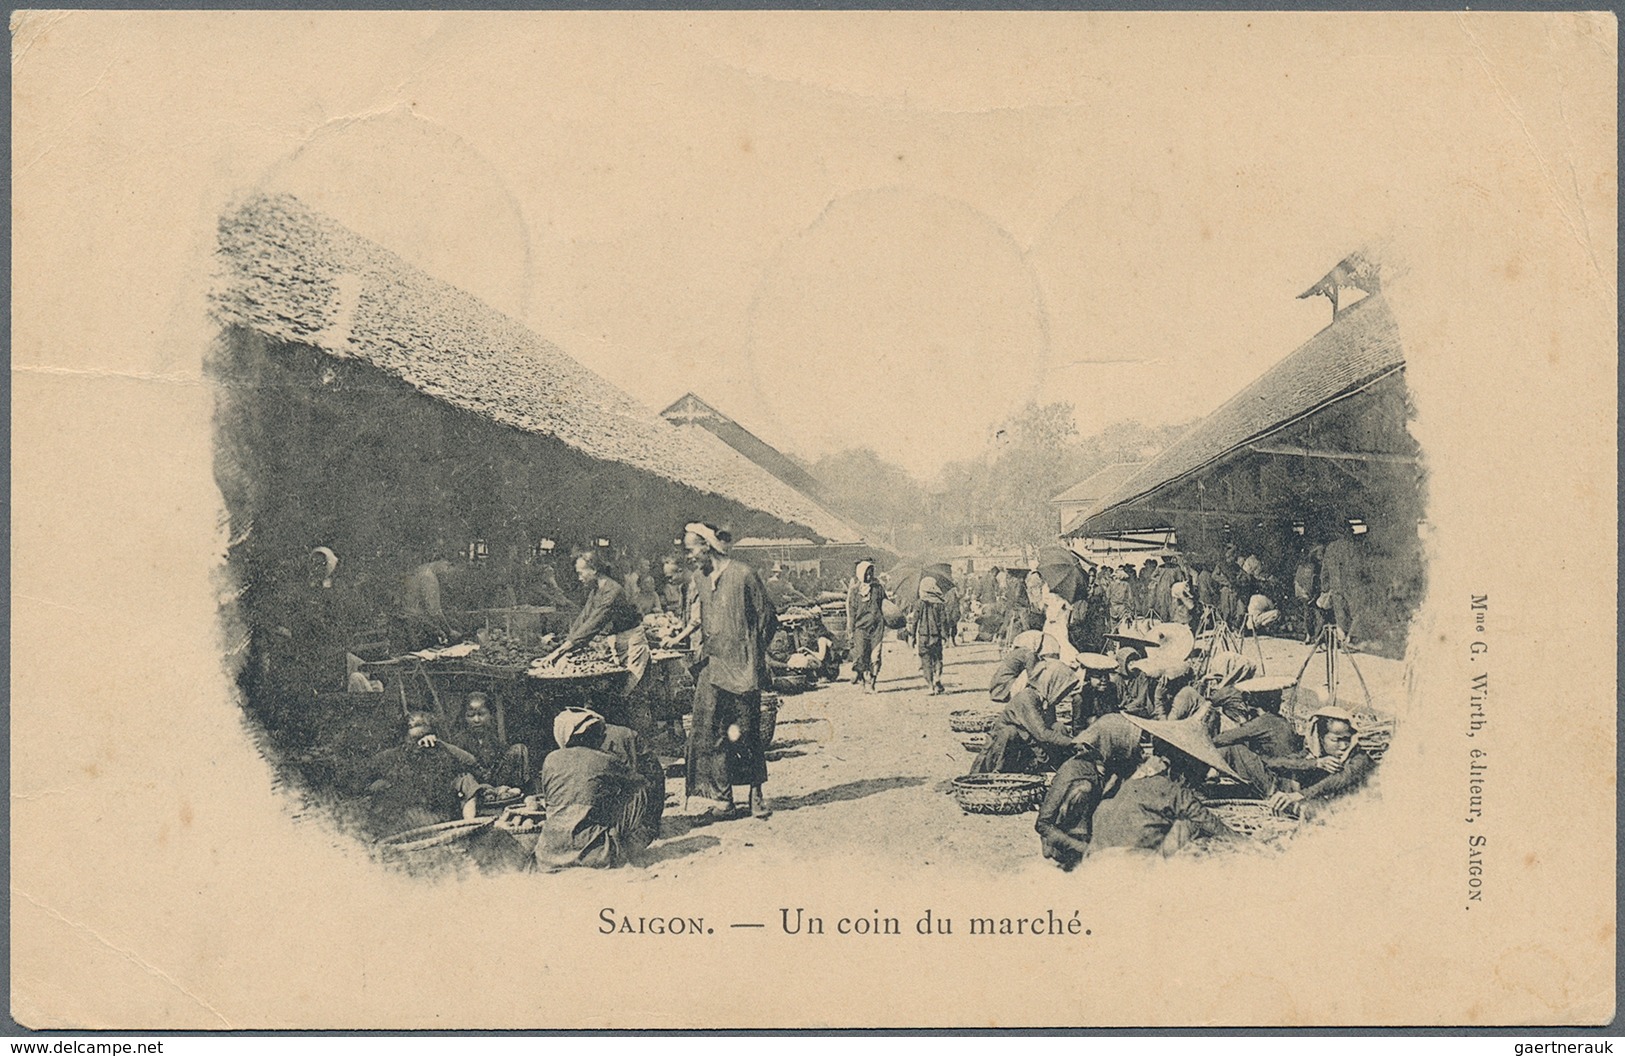 Französisch-Indochina: 1904/1906, assortment of 54 different ppc, depicting street scenes, local mar